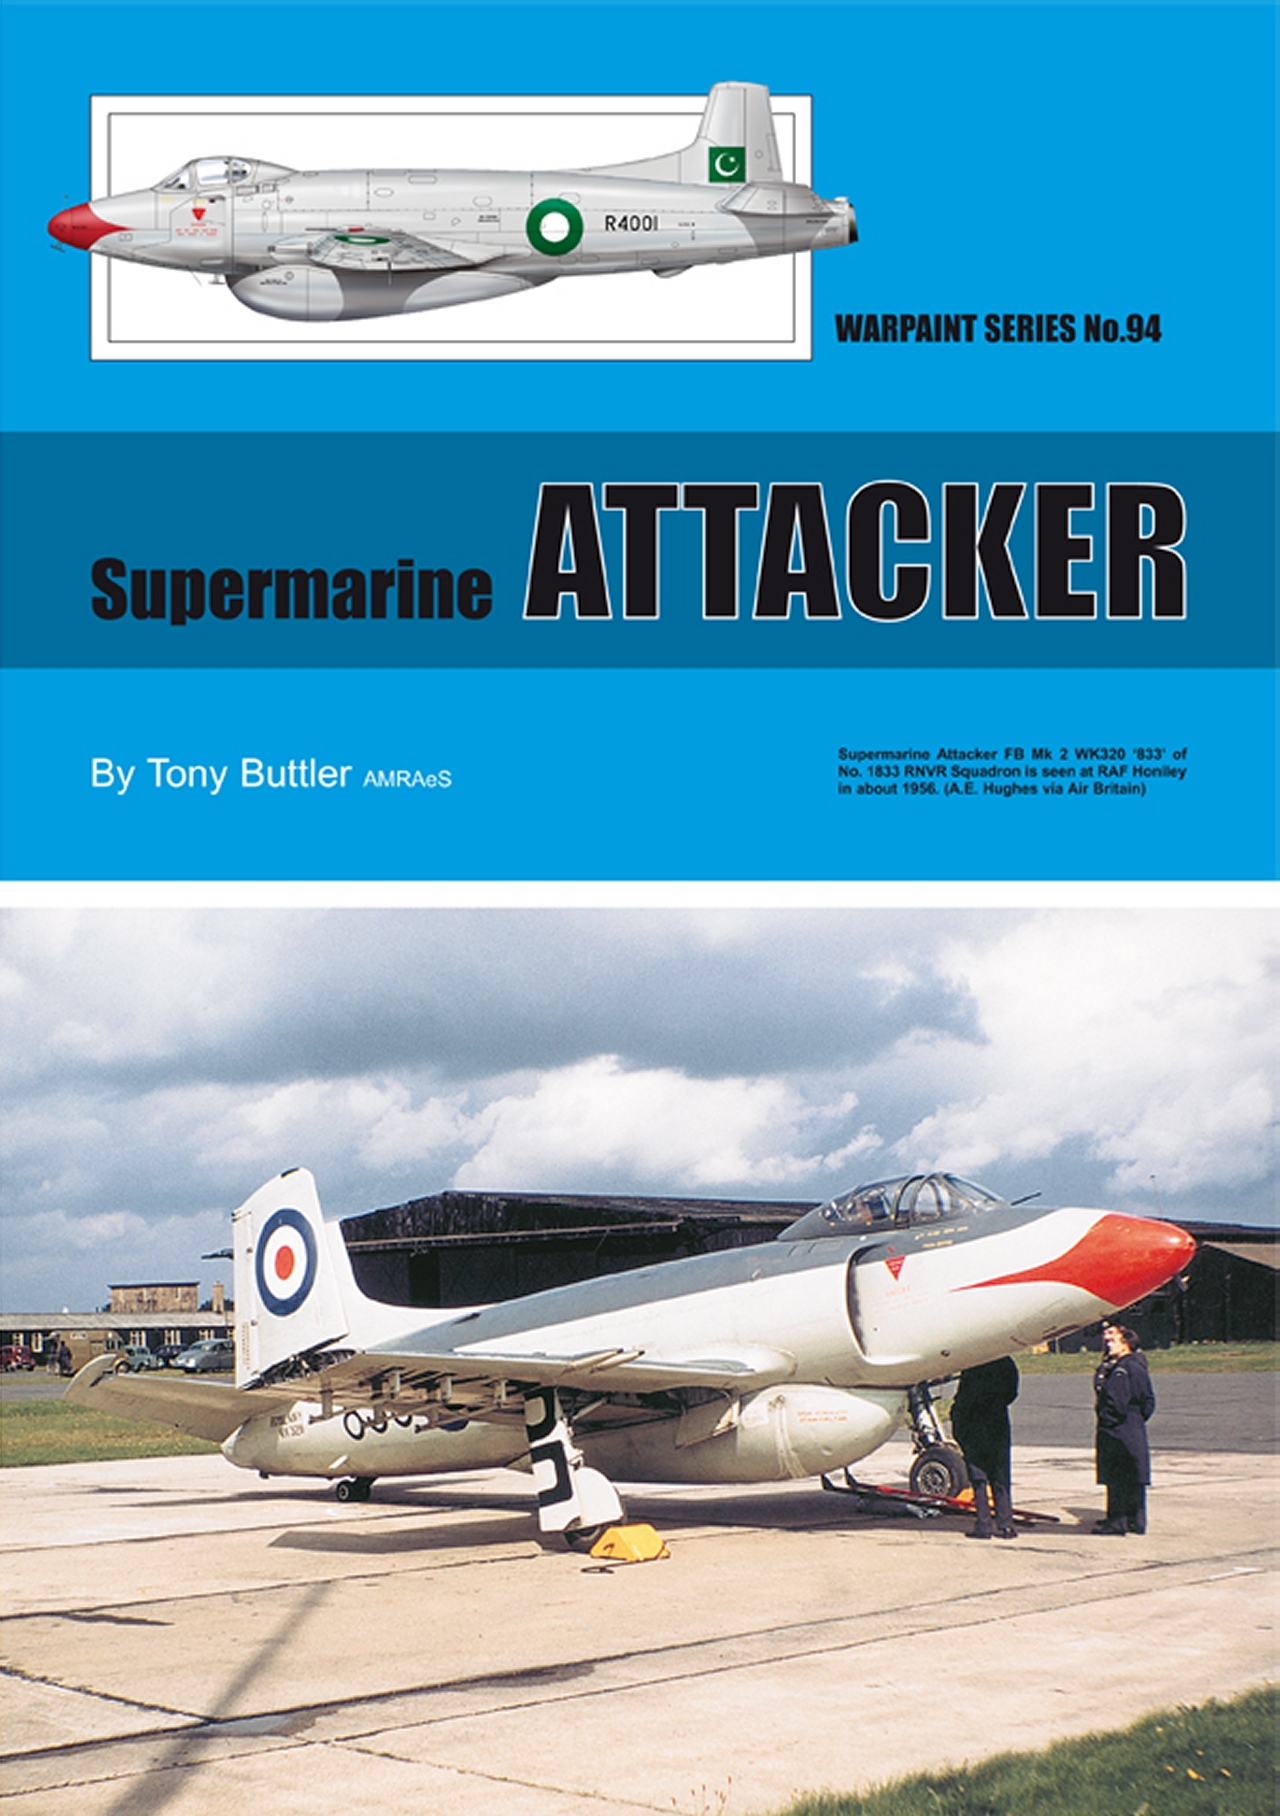 Guideline Publications Ltd No 94 Supermarine Attacker No. 94 in the Warpaint series  